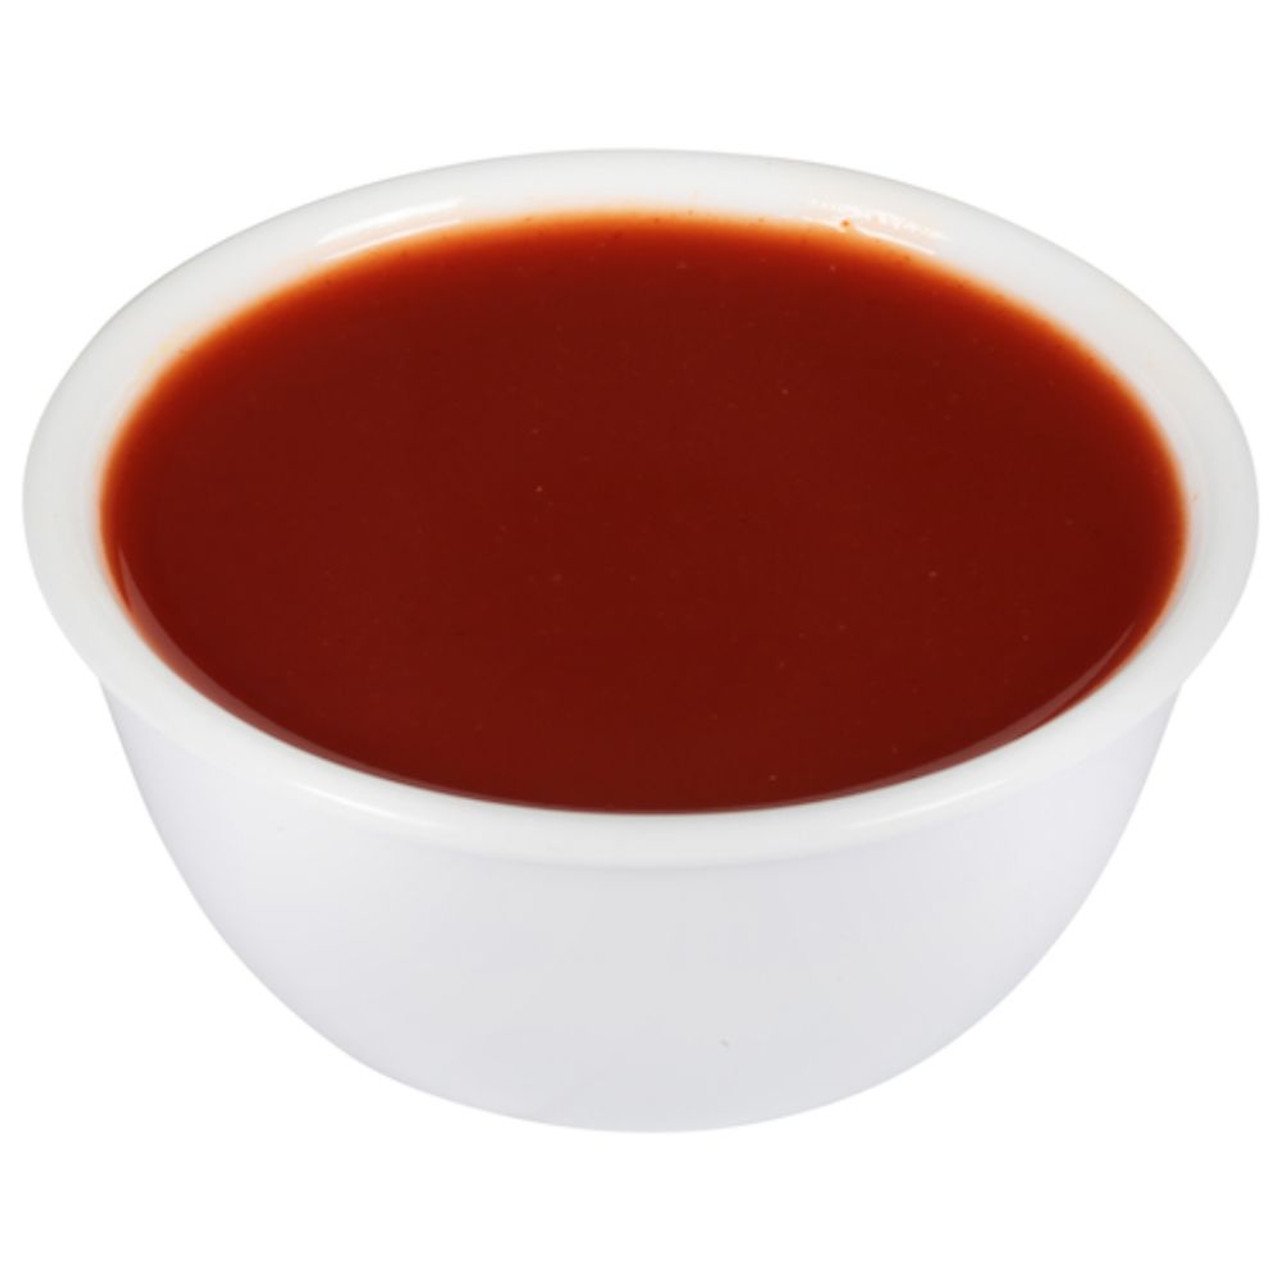 LOUISIANA hot sauce 4/1gallon plastic – Pacific Commerce